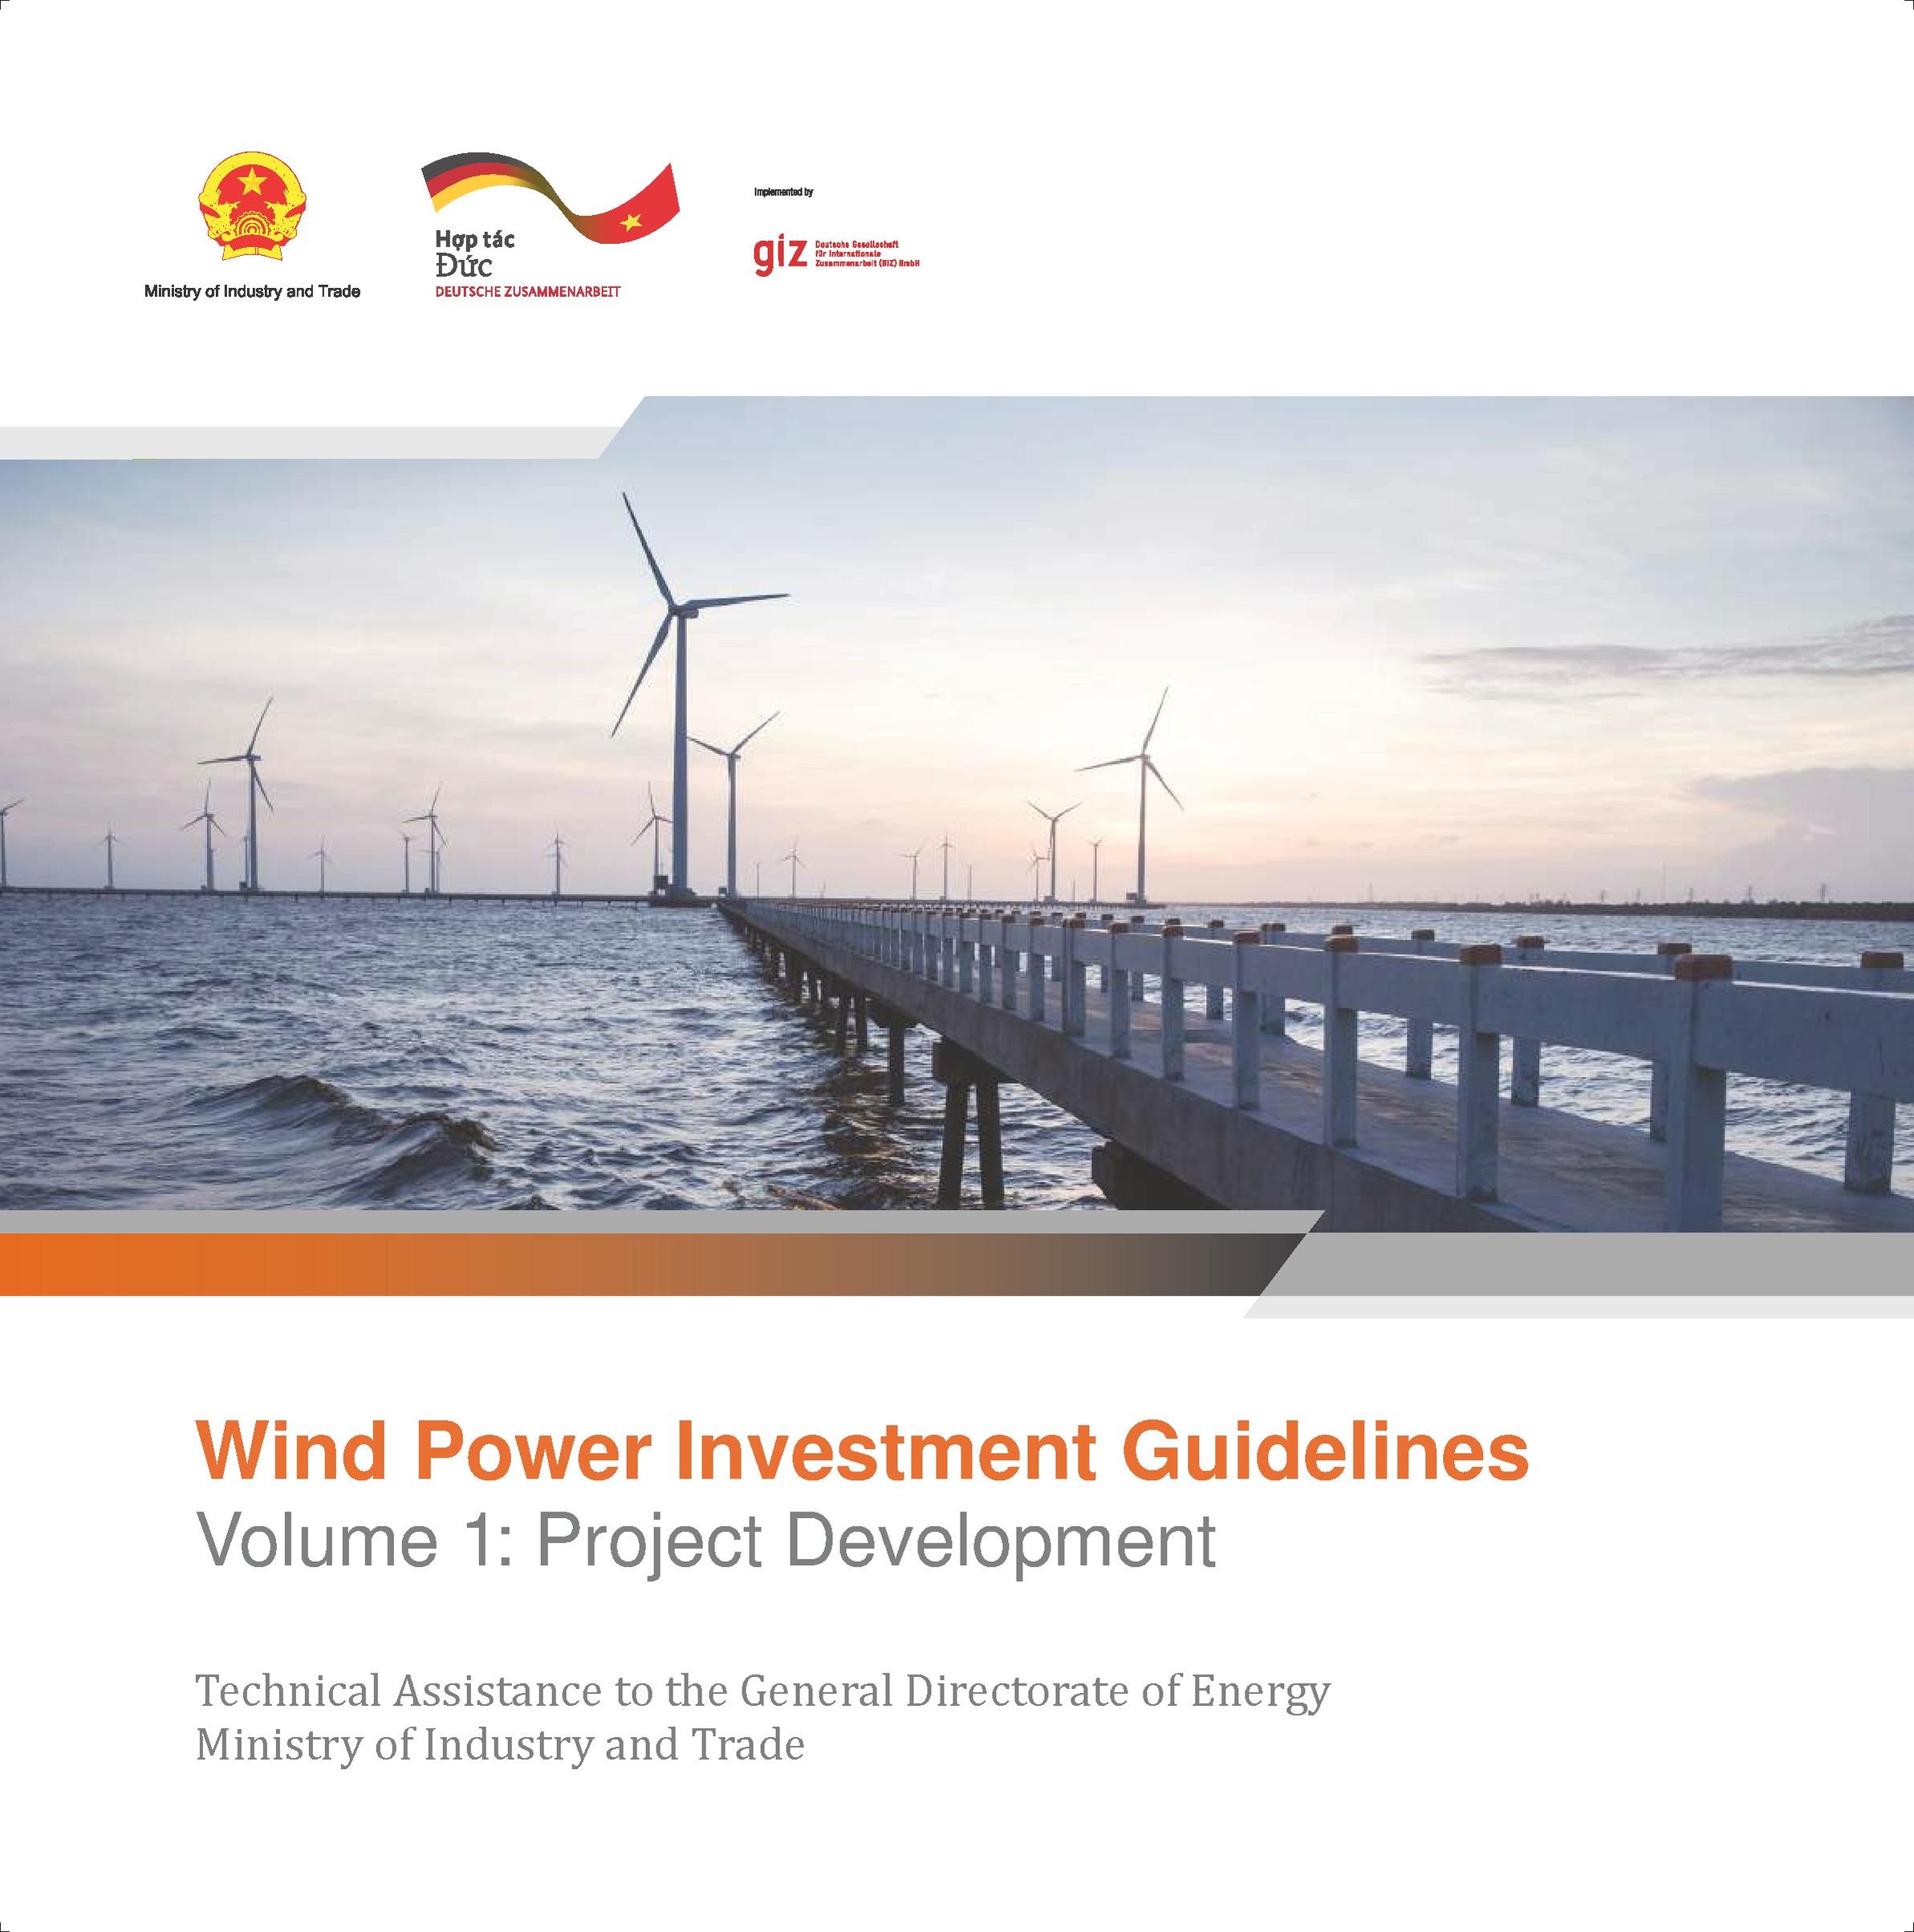 Wind Invetment Guidelines Vol.1